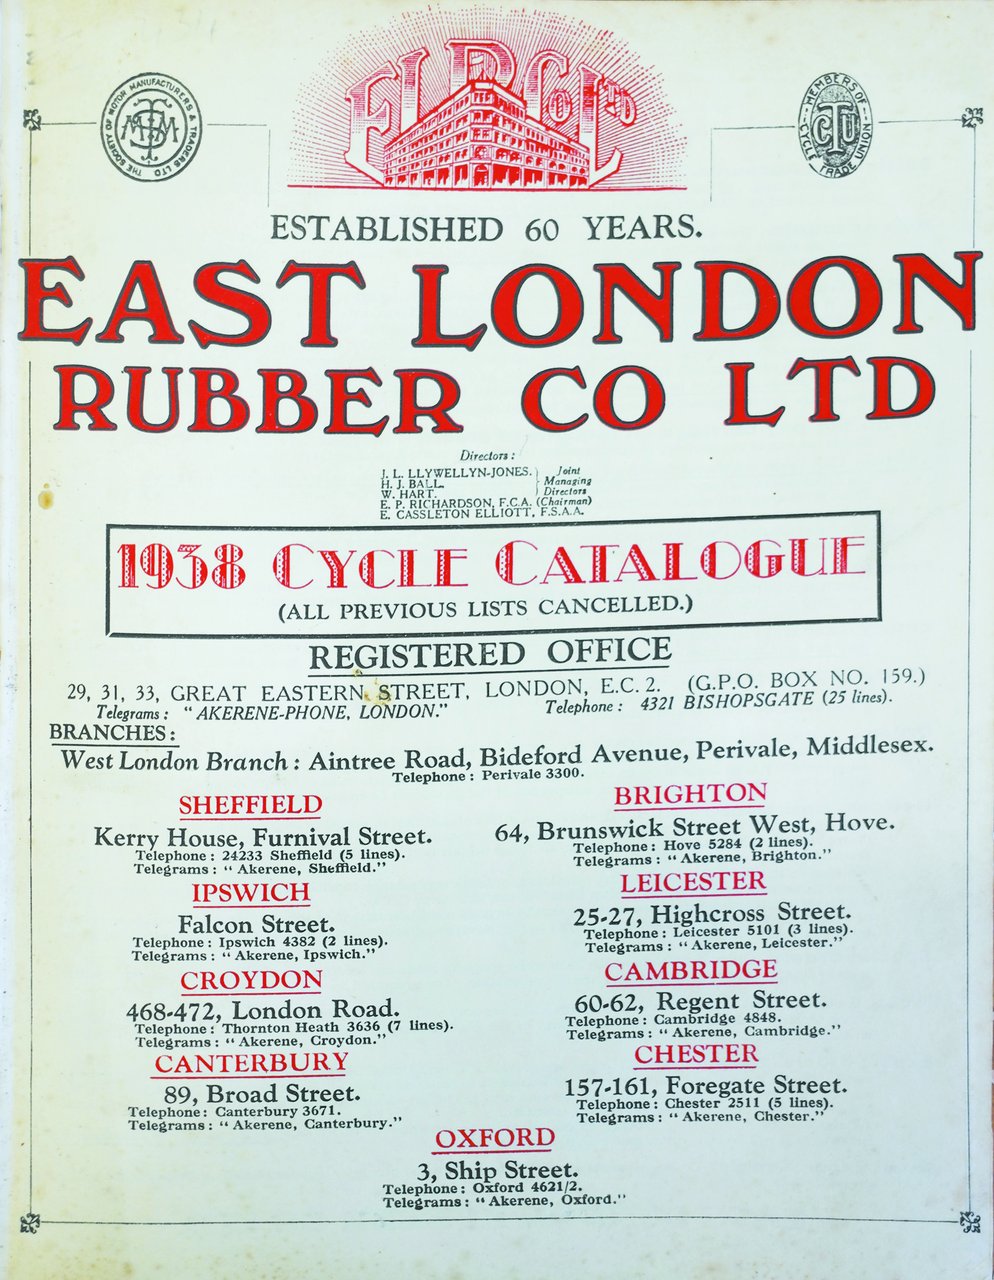 EAST LONDON RUBBER CO. LTD.: CYCLE CATALOGUE. - Established 60 …